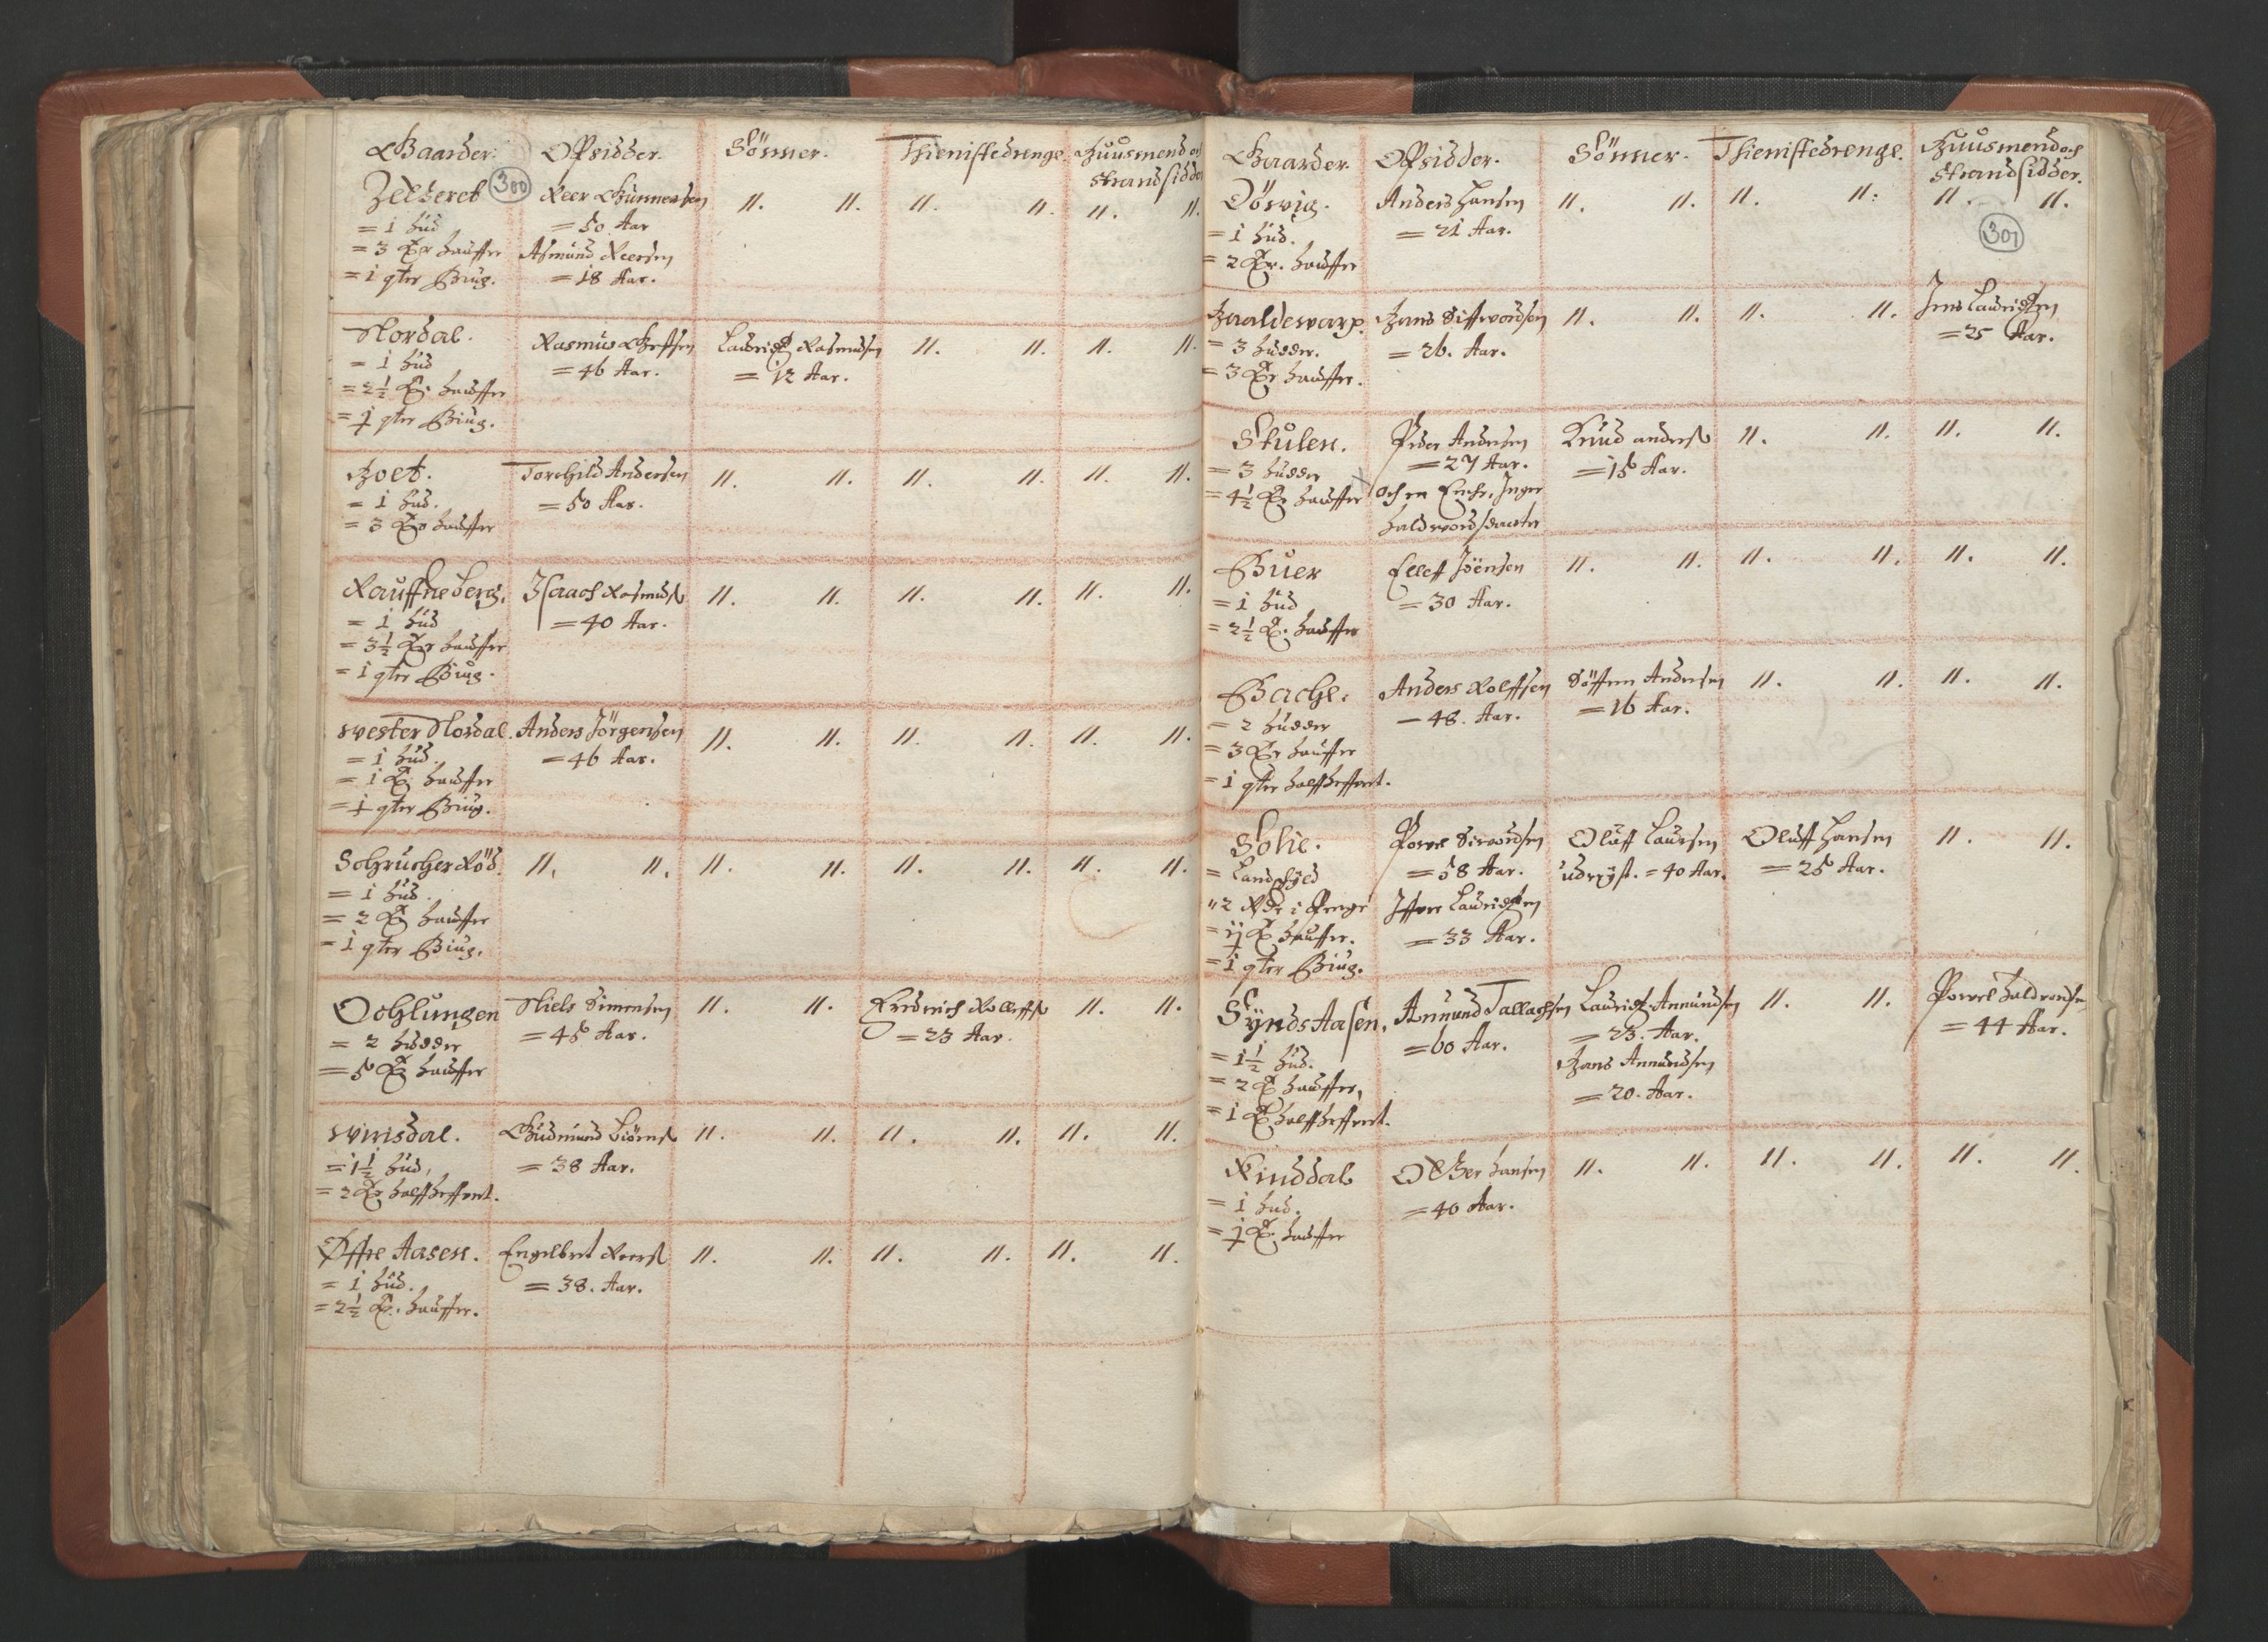 RA, Vicar's Census 1664-1666, no. 12: Øvre Telemark deanery, Nedre Telemark deanery and Bamble deanery, 1664-1666, p. 300-301